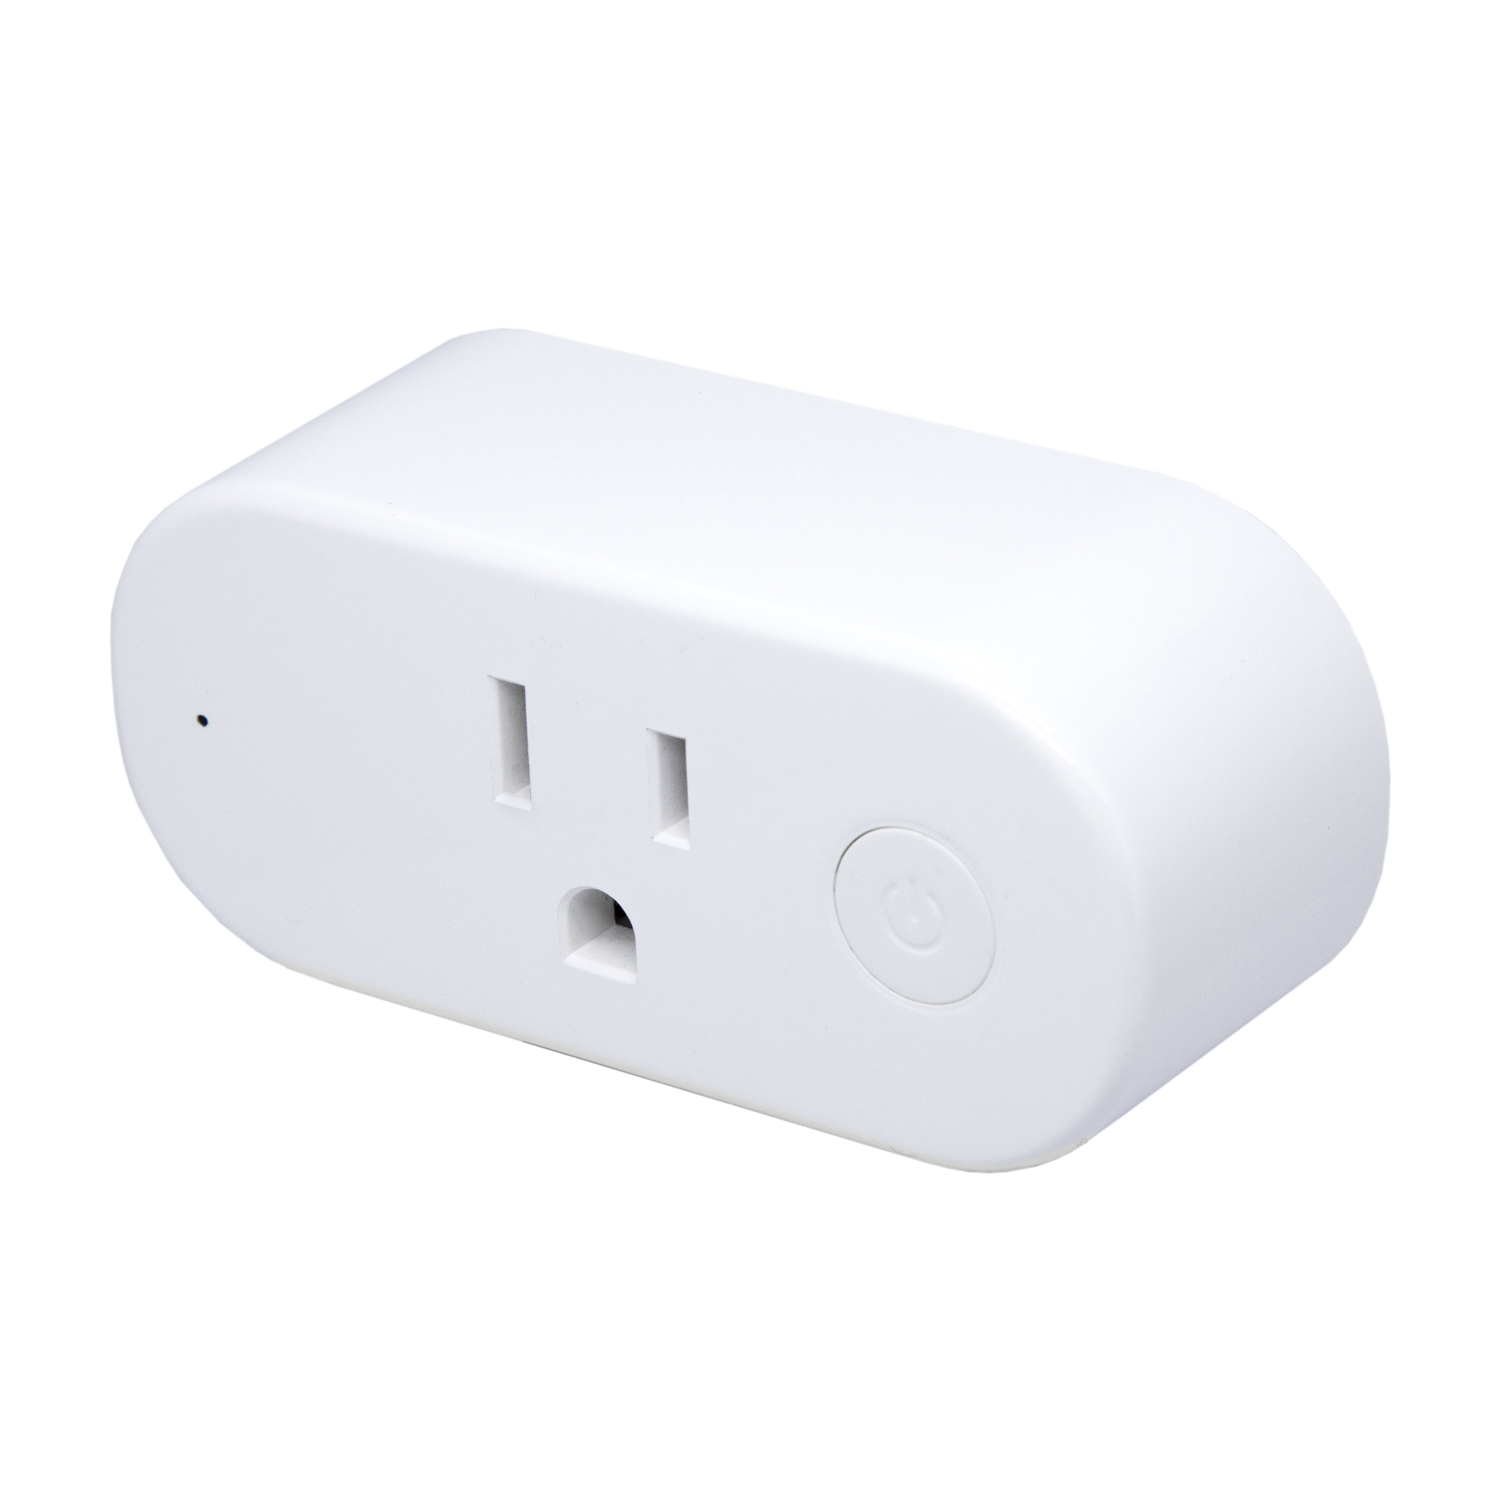 Shelly Plus Plug S - smart plug WiFi 2500W - White Botland - Robotic Shop